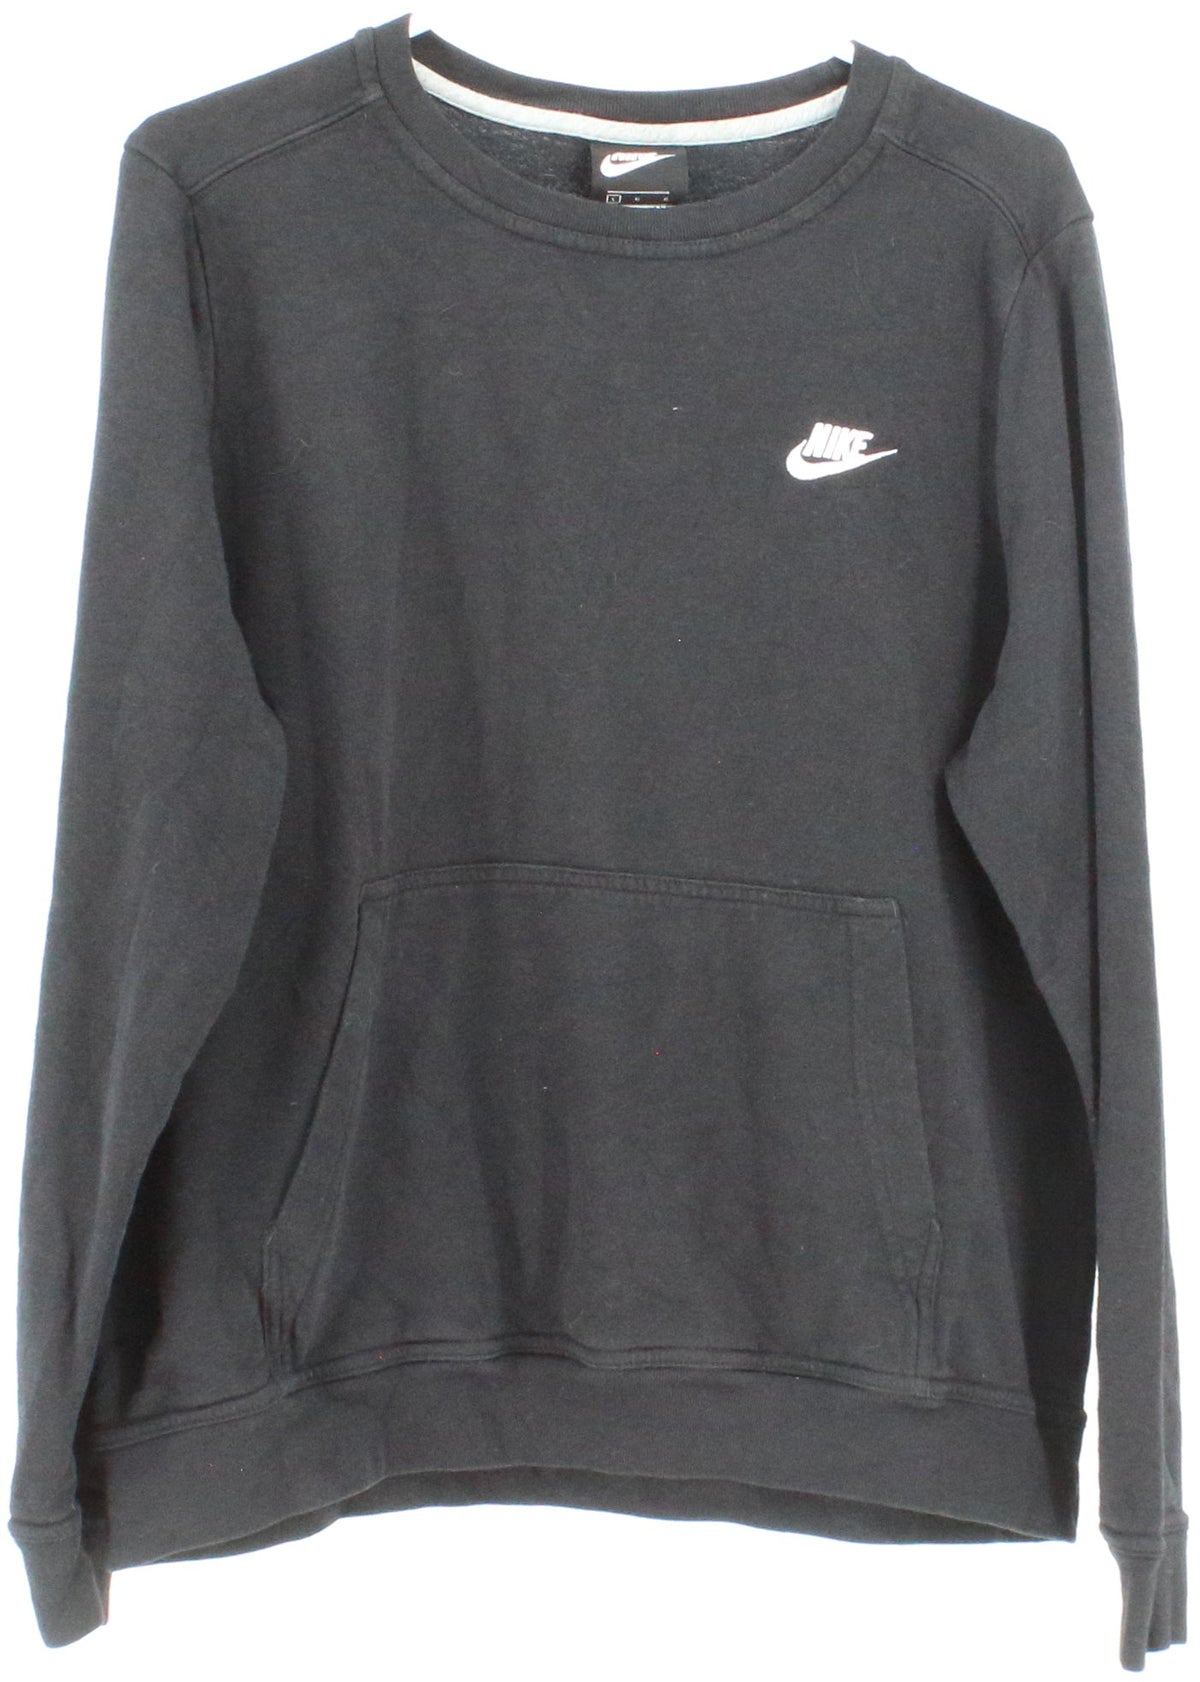 Nike Black Sweatshirt With Front Pocket